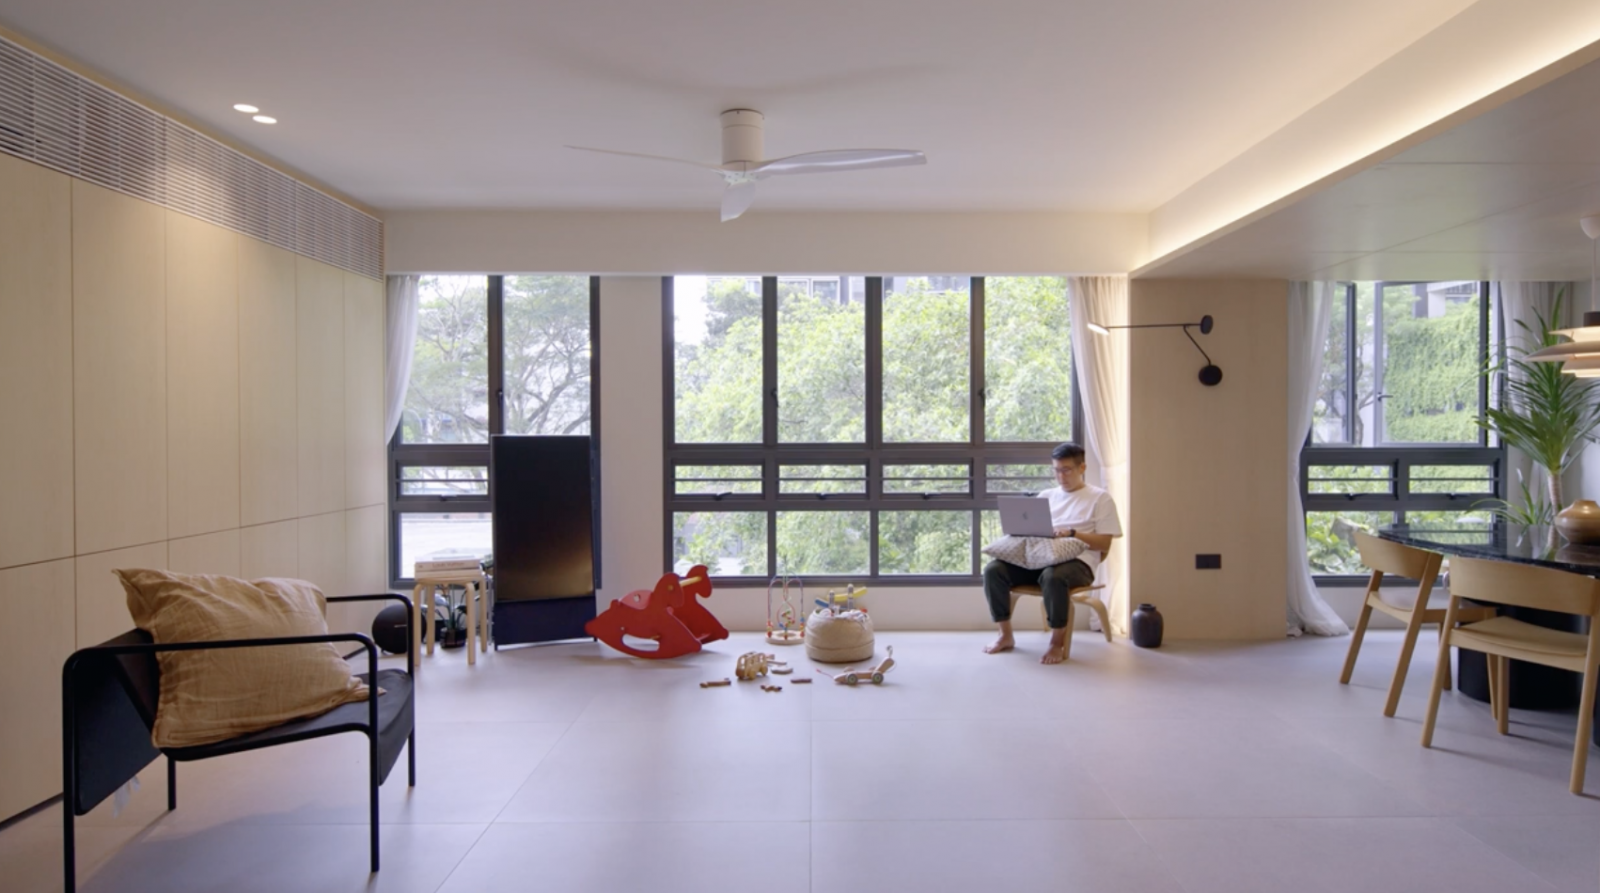 Inside A Stylish Minimalist Home Designed To Be Kid Friendly 1